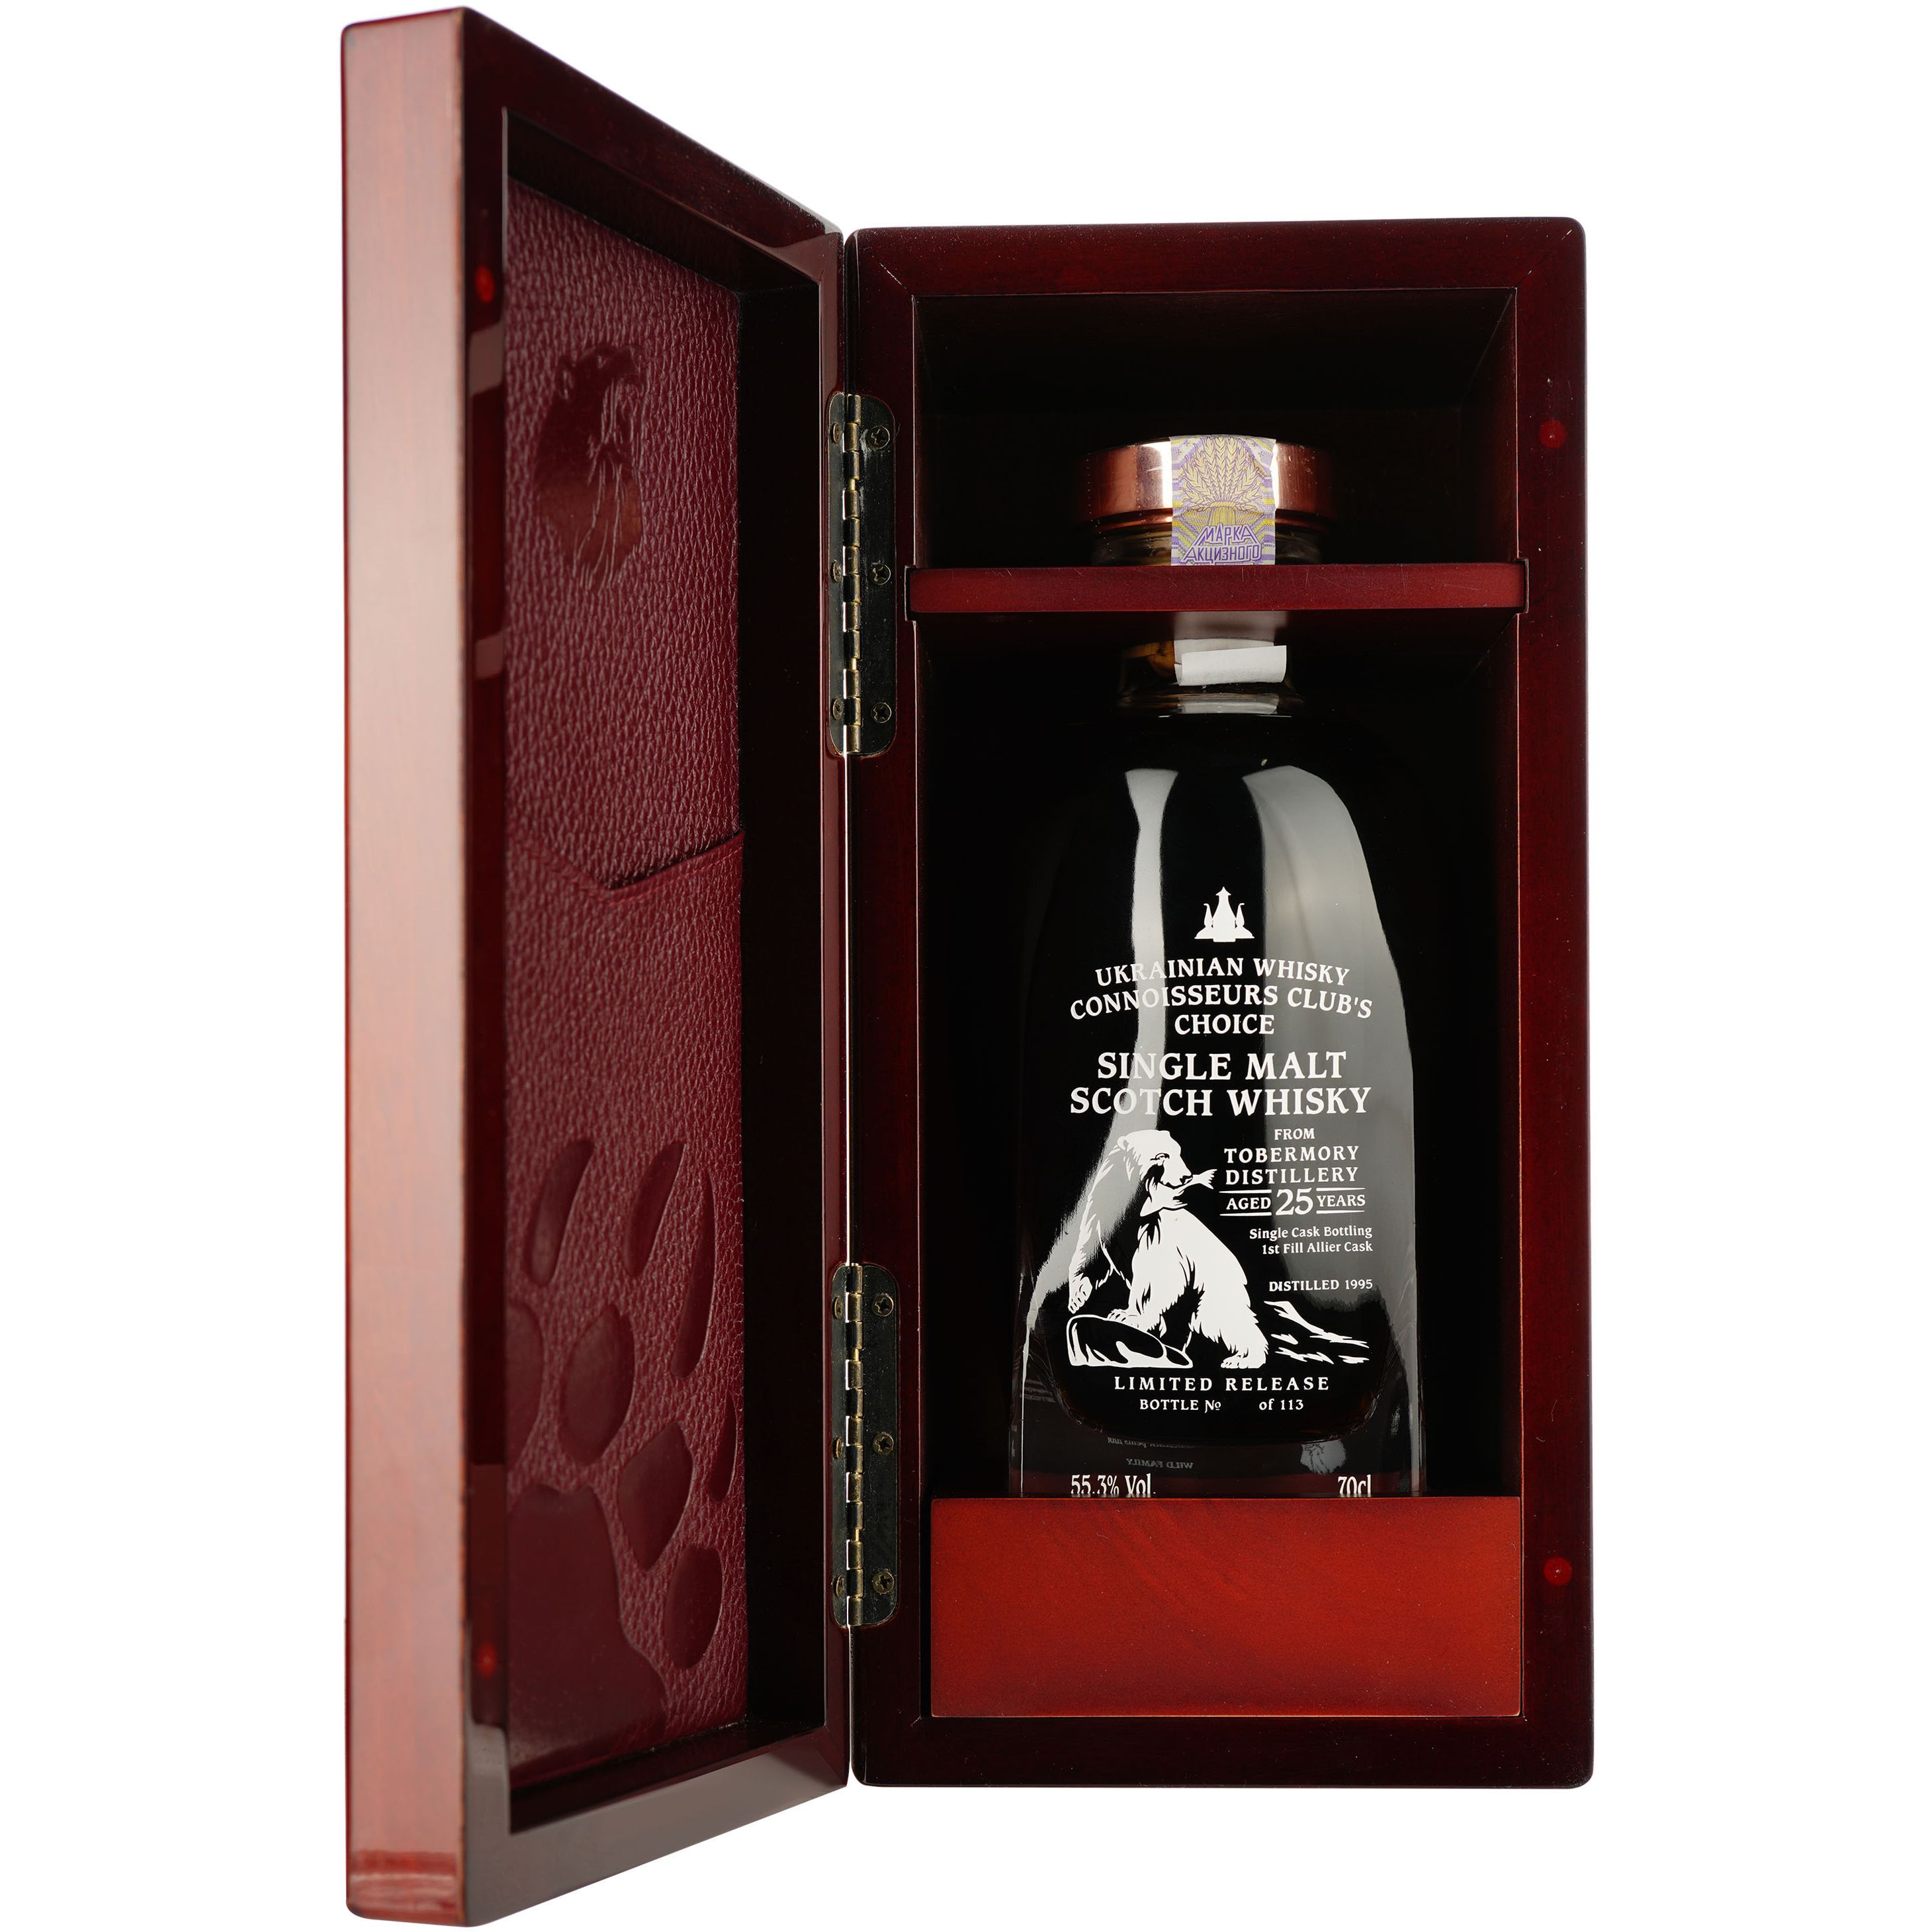 Віскі Tobermory 25 Years Old 1st Fill Allier Single Malt Scotch Whisky 55.3% 0.7л у подарунковій упаковці - фото 4